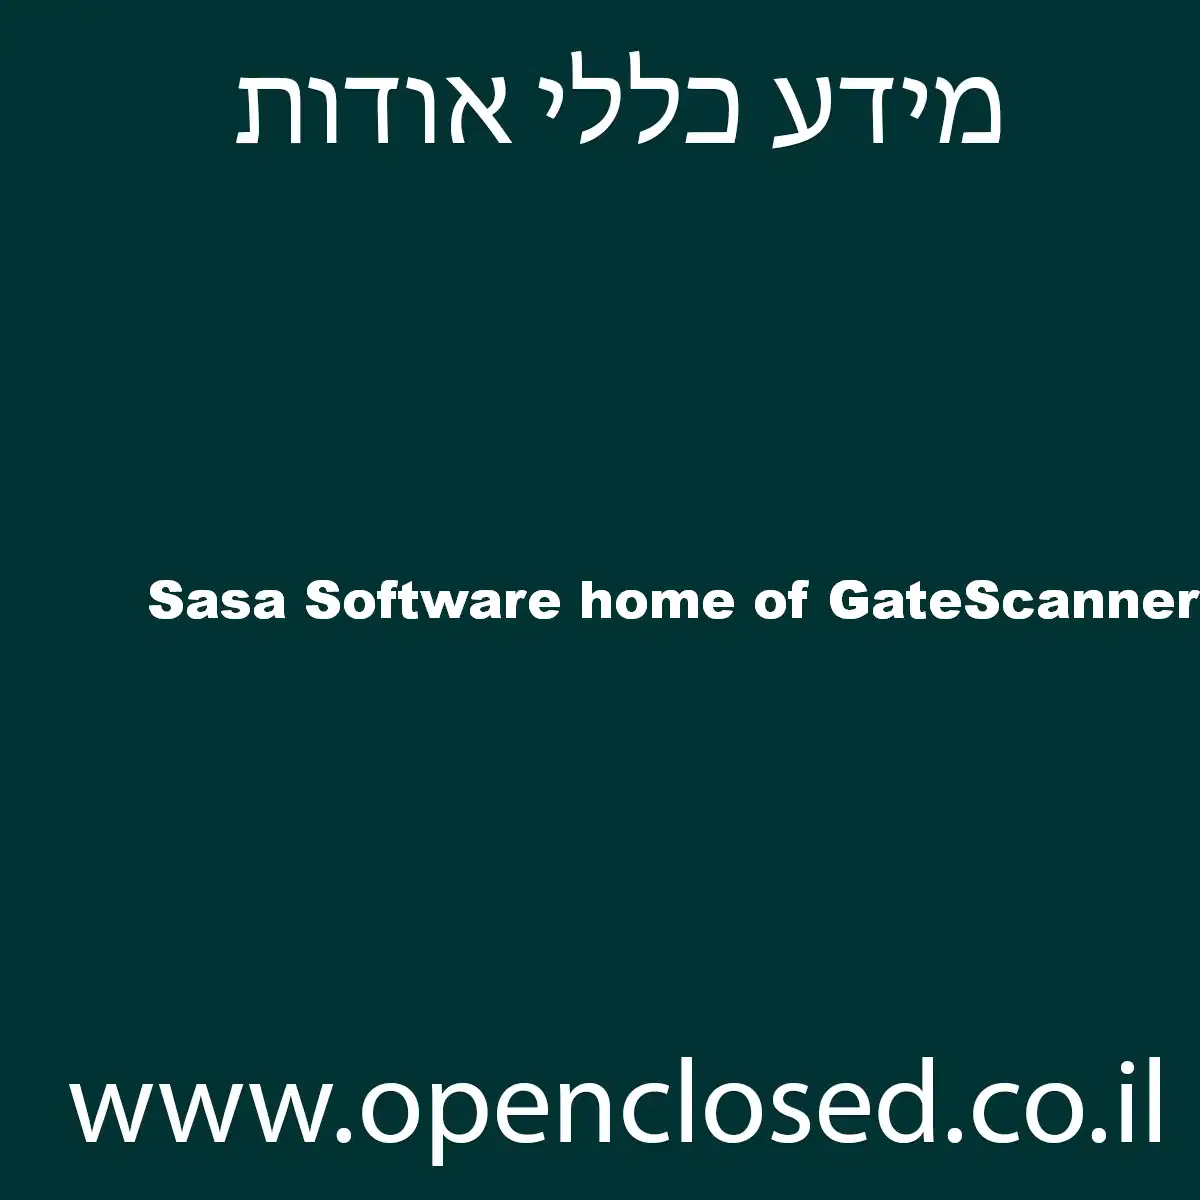 Sasa Software home of GateScanner